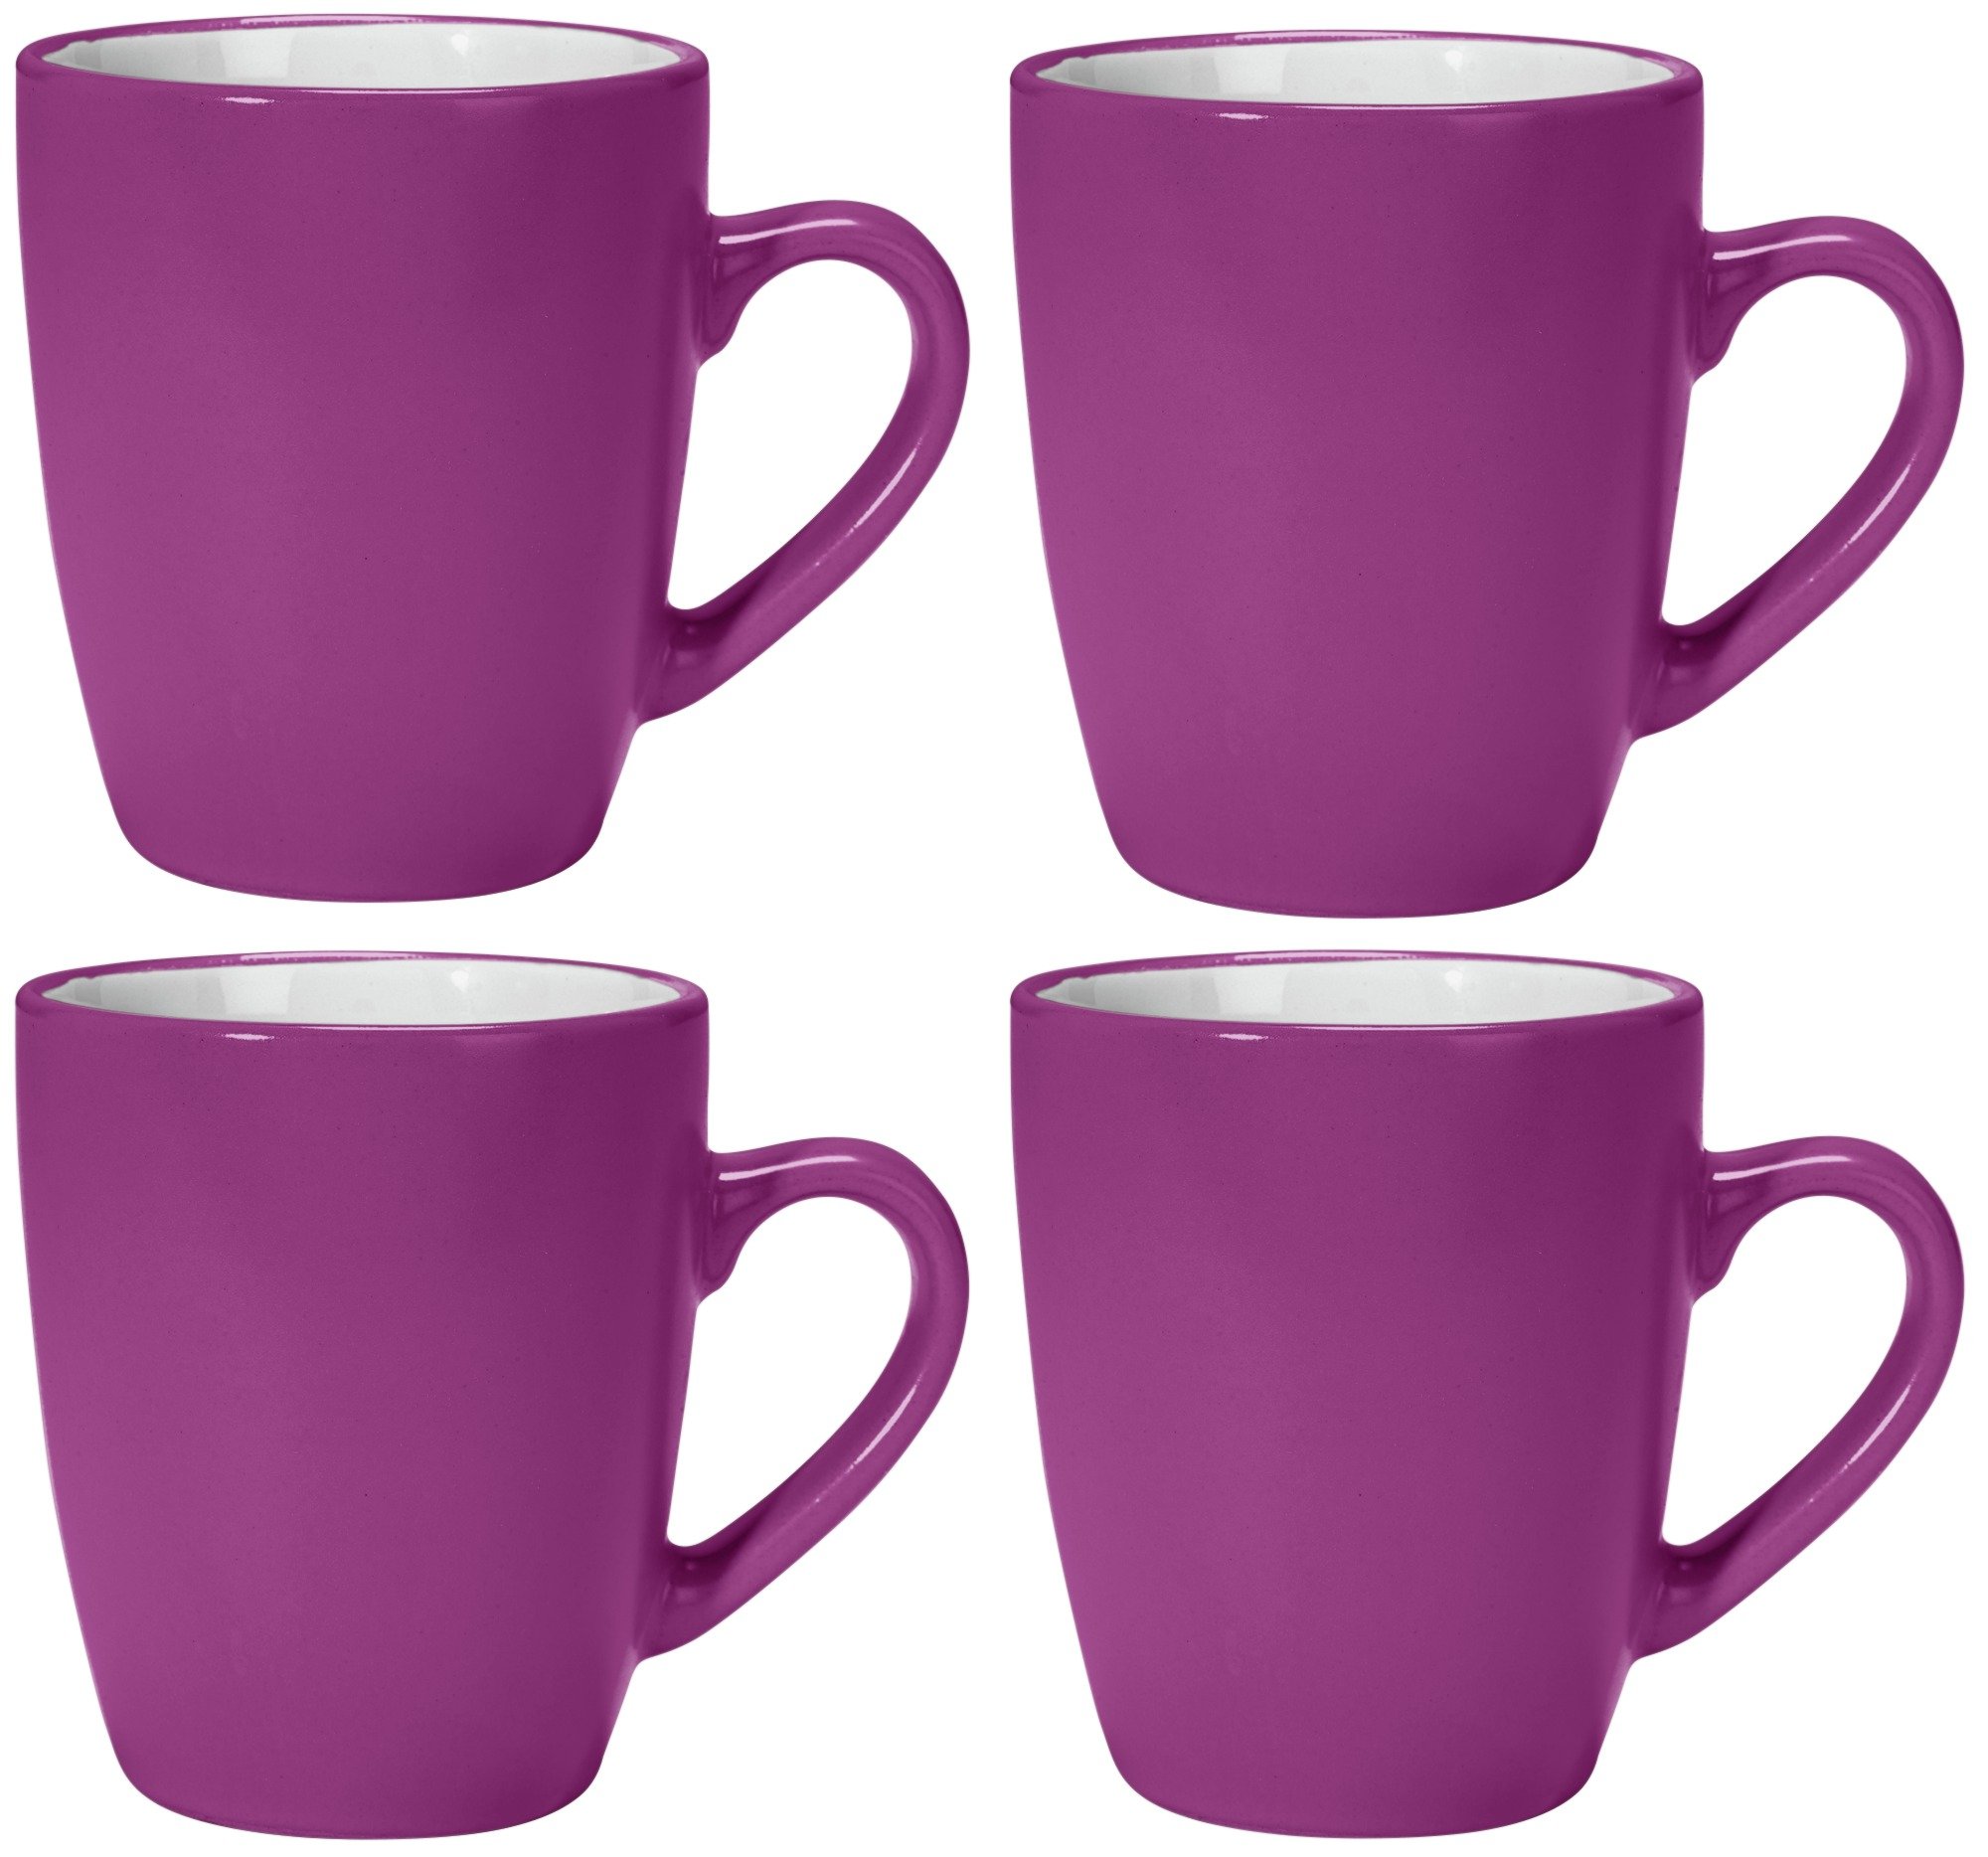 ColourMatch Set of 4 Mugs - Grape.